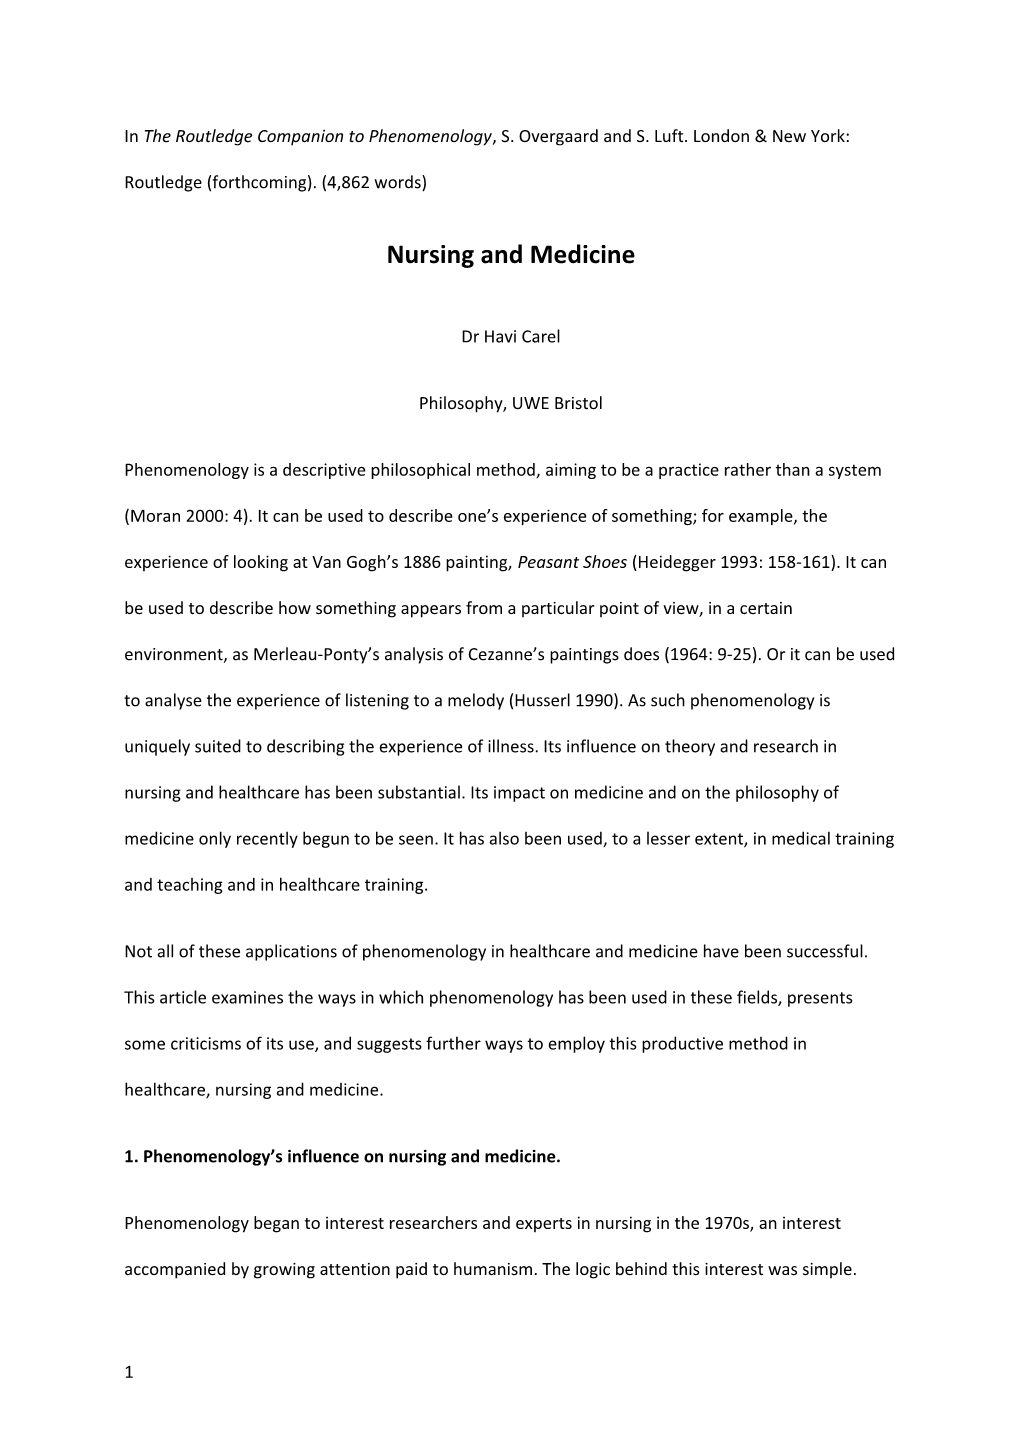 Nursing and Medicine